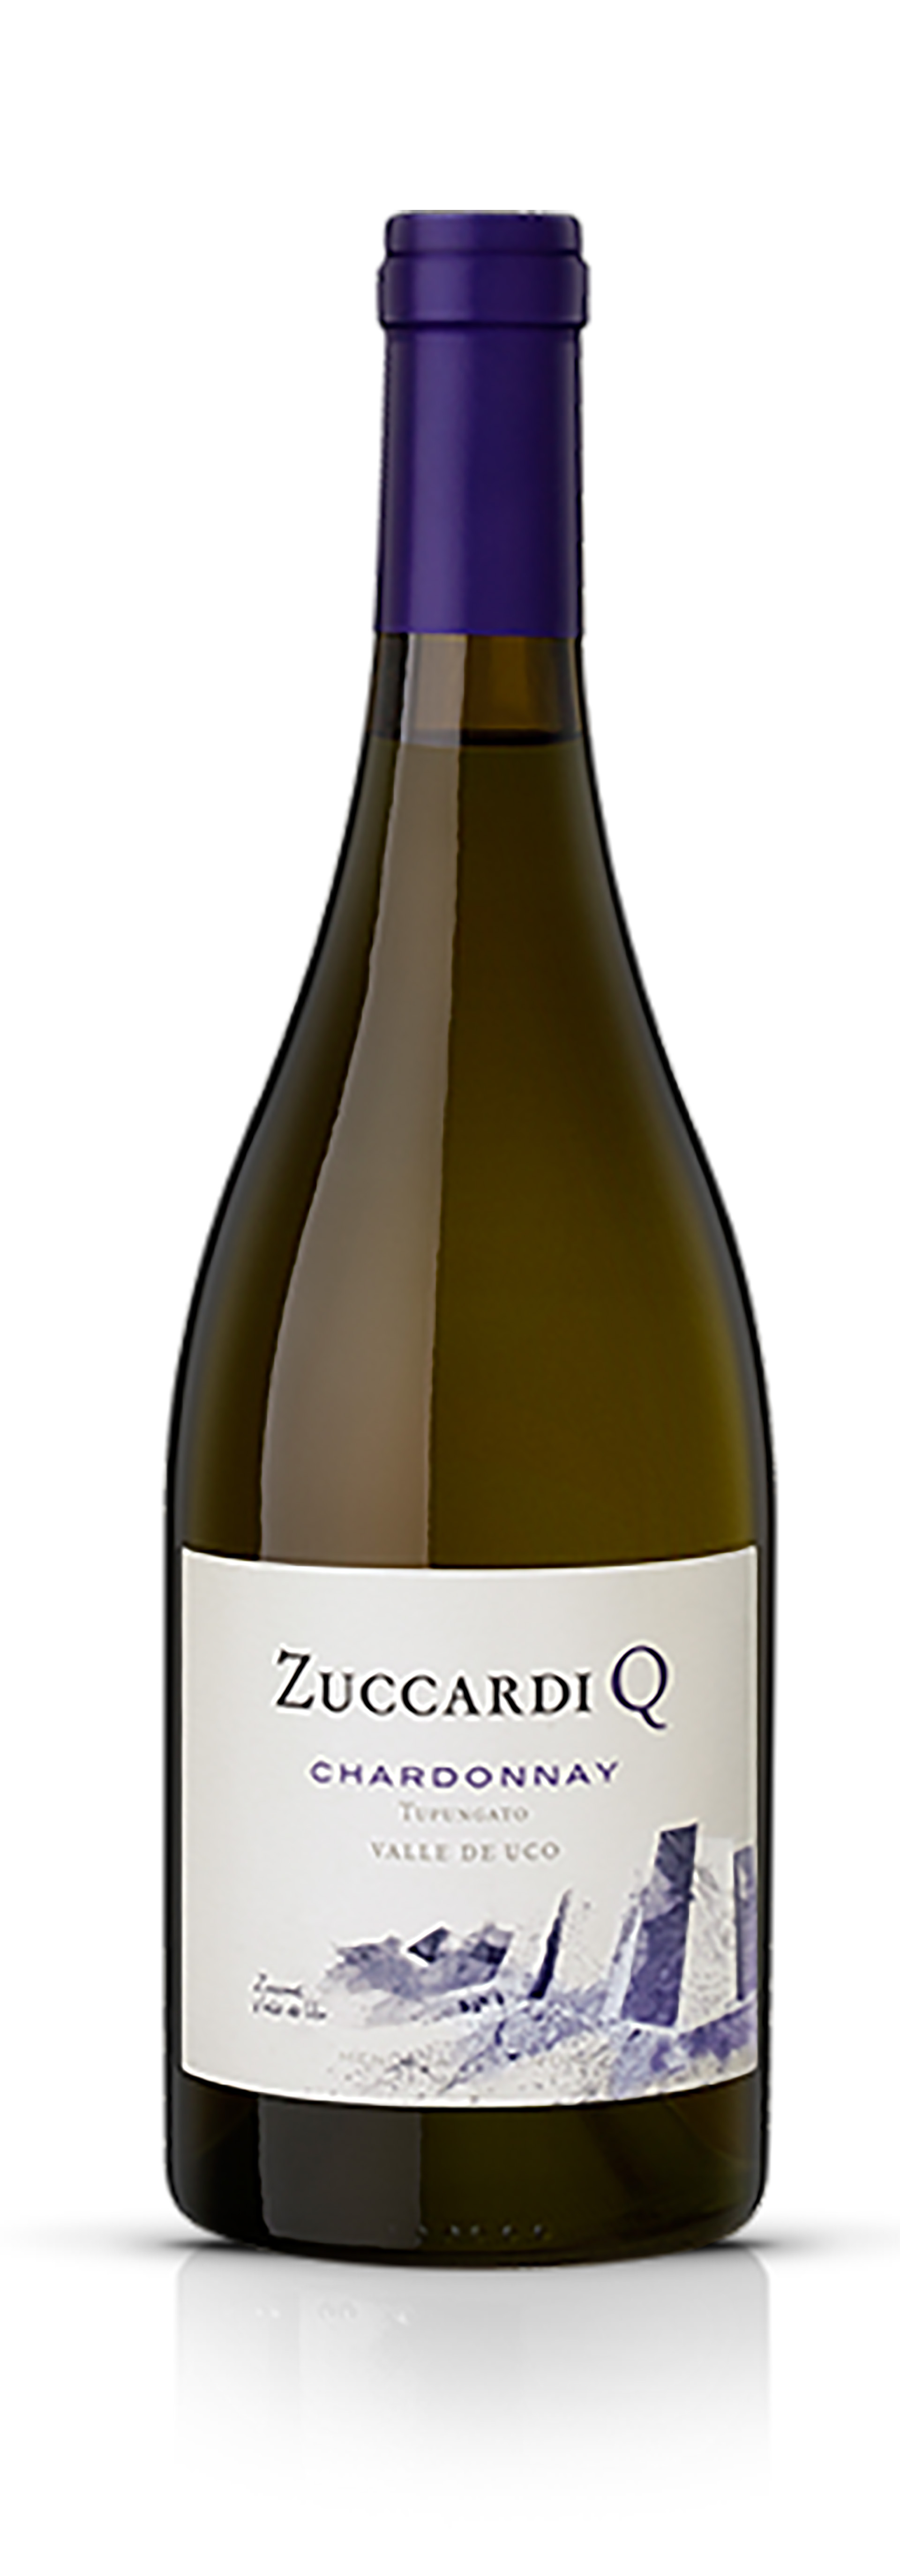  Zuccardi Q Chardonnay 2019